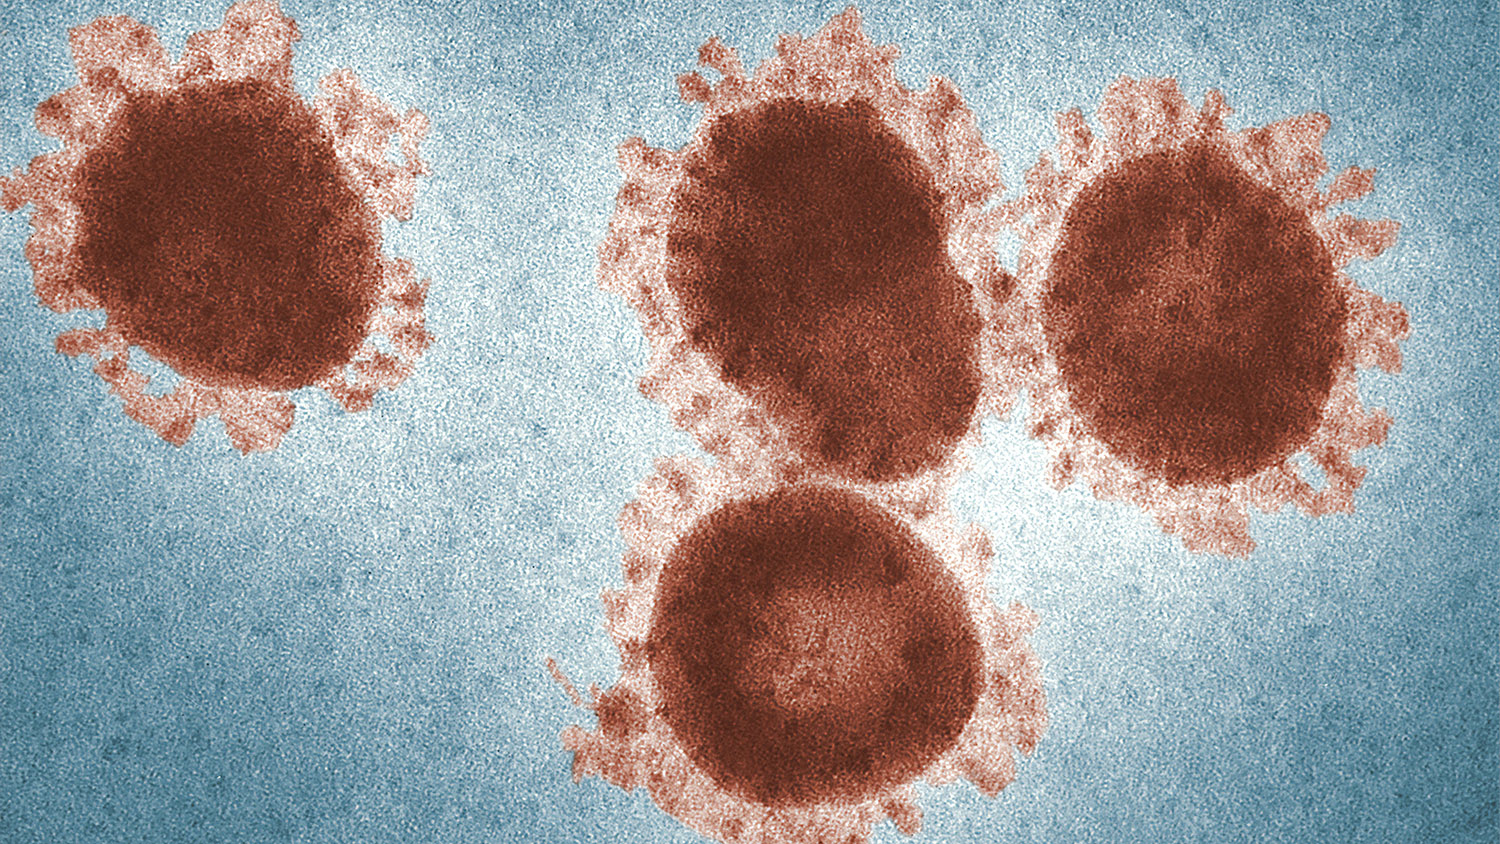 Four coronaviruses as viewed with an electron microscope